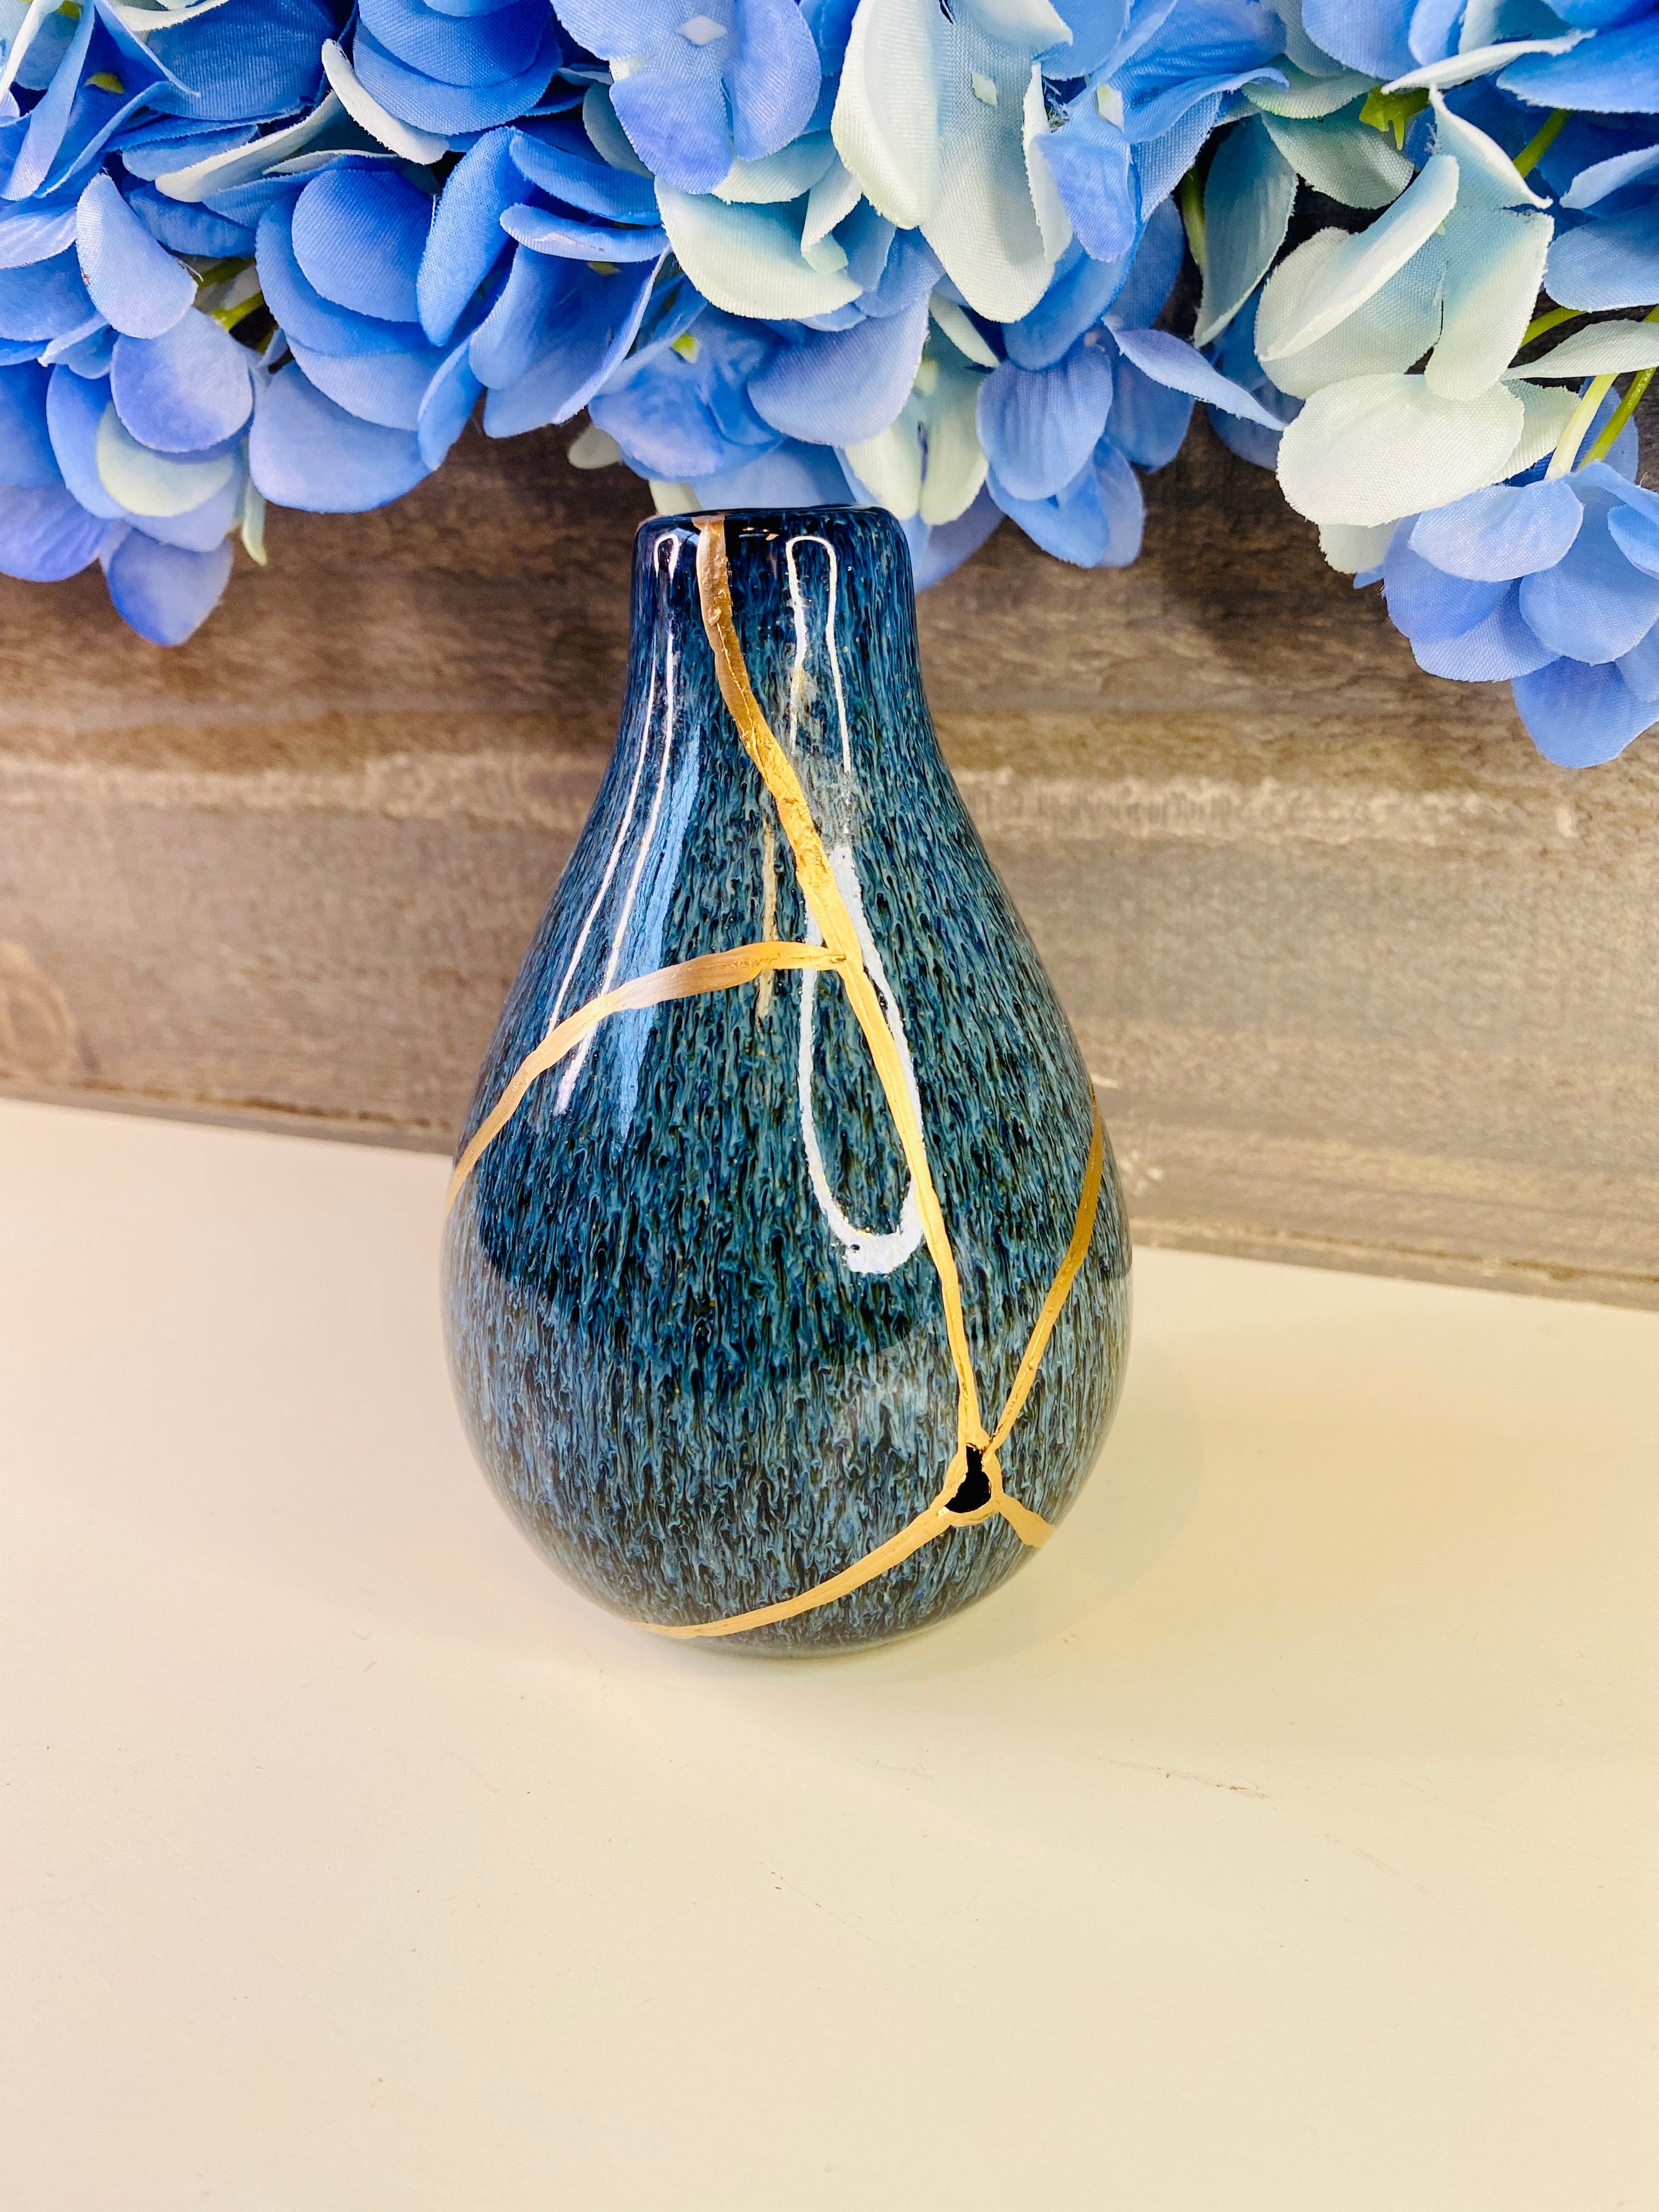 Kintsugi Gifts, Blue Bud Vase, Kintsugi Pottery, Japanese Decor, Minimalist, Home Decor, Graduation, Kintsugi Reactive Blue Bud Vase